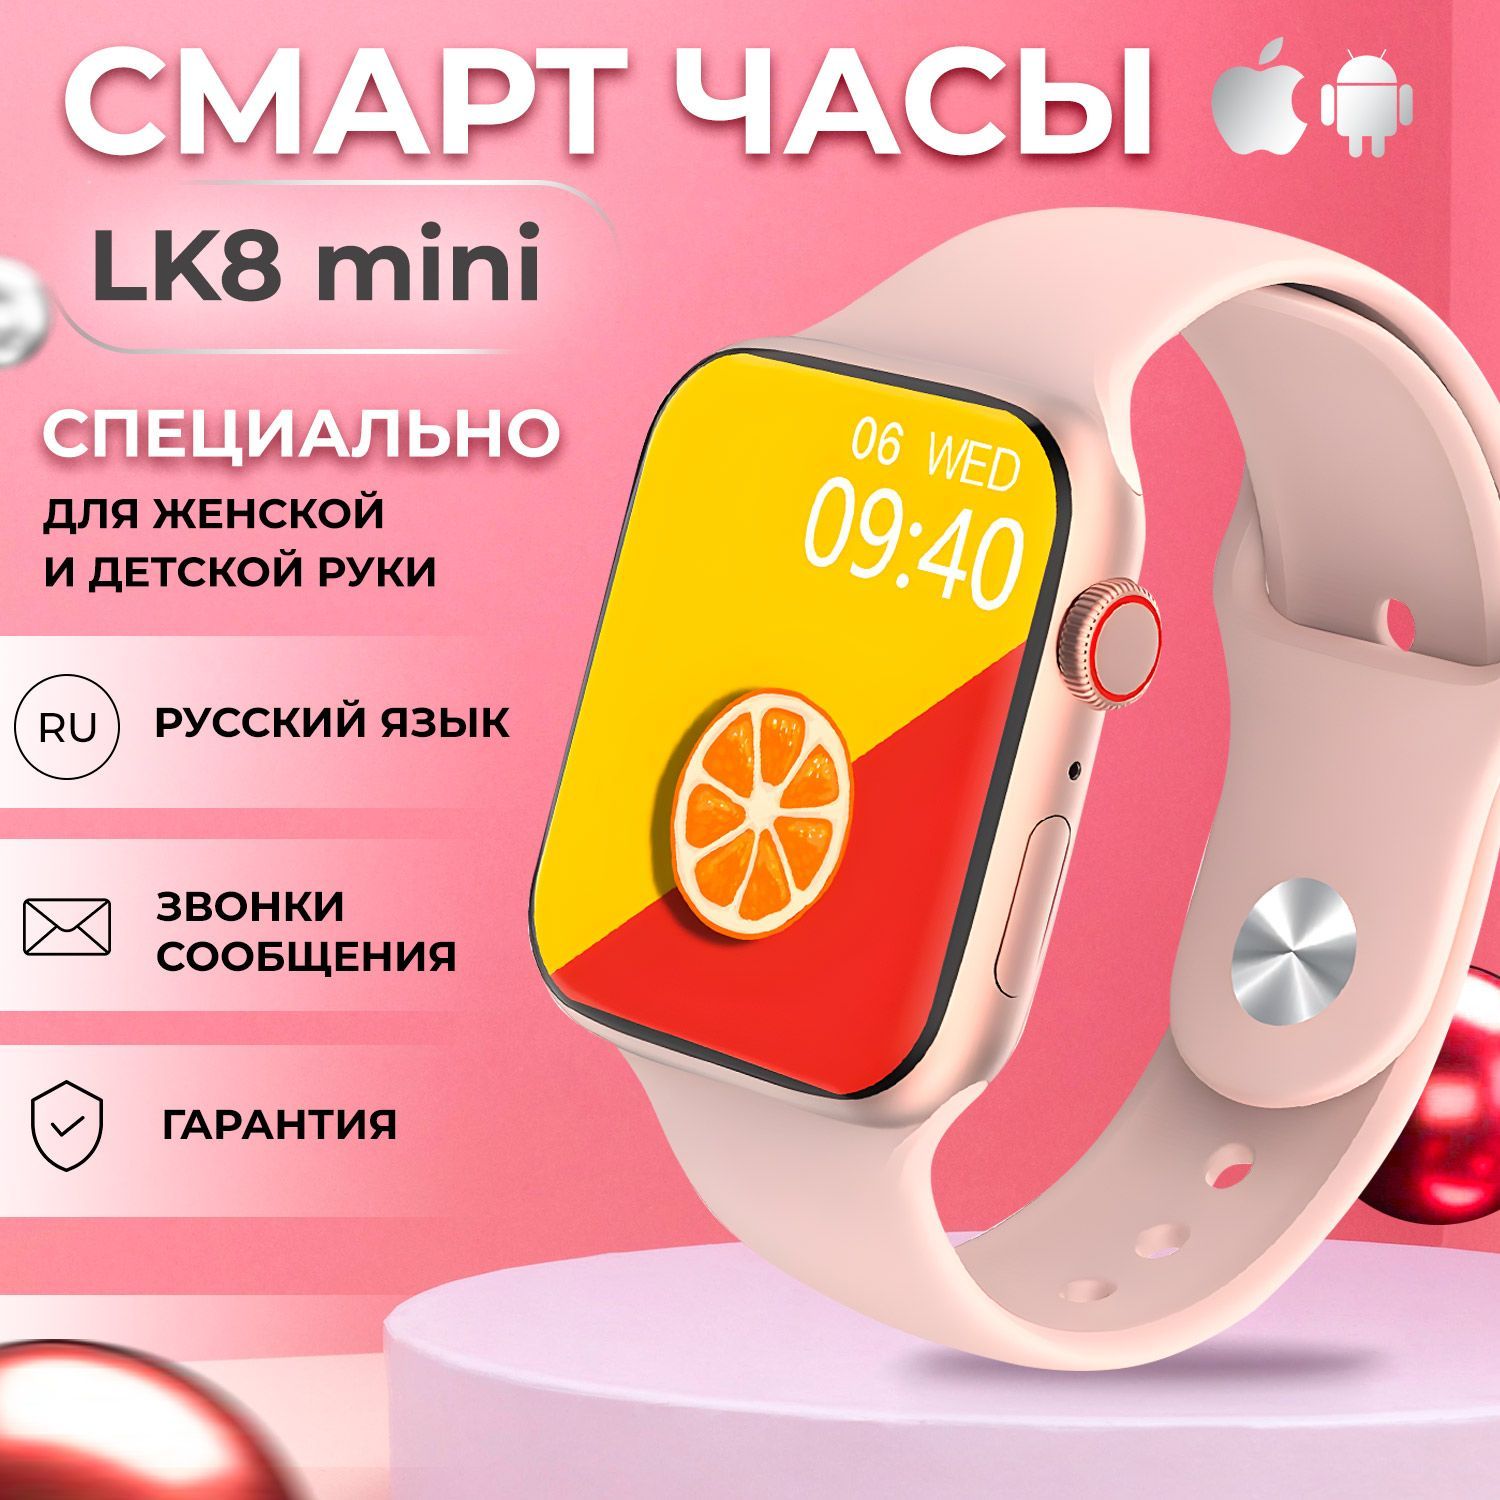 LK 8 Mini Smart watch. Детские смарт часы lk9 Mini или lk8 Mini. Smart watch LK gt 4 Mini золотой. Смарт часы lk8 Mini или lk9 Mini какие лучше. Смарт часы lk 8